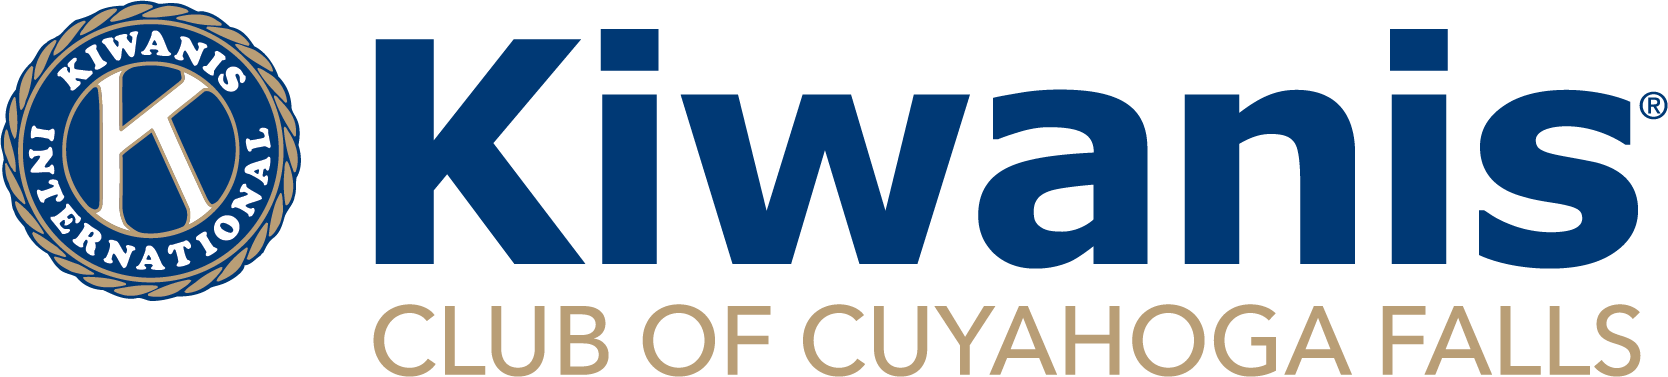 Kiwanis Club of Cuyahoga Falls